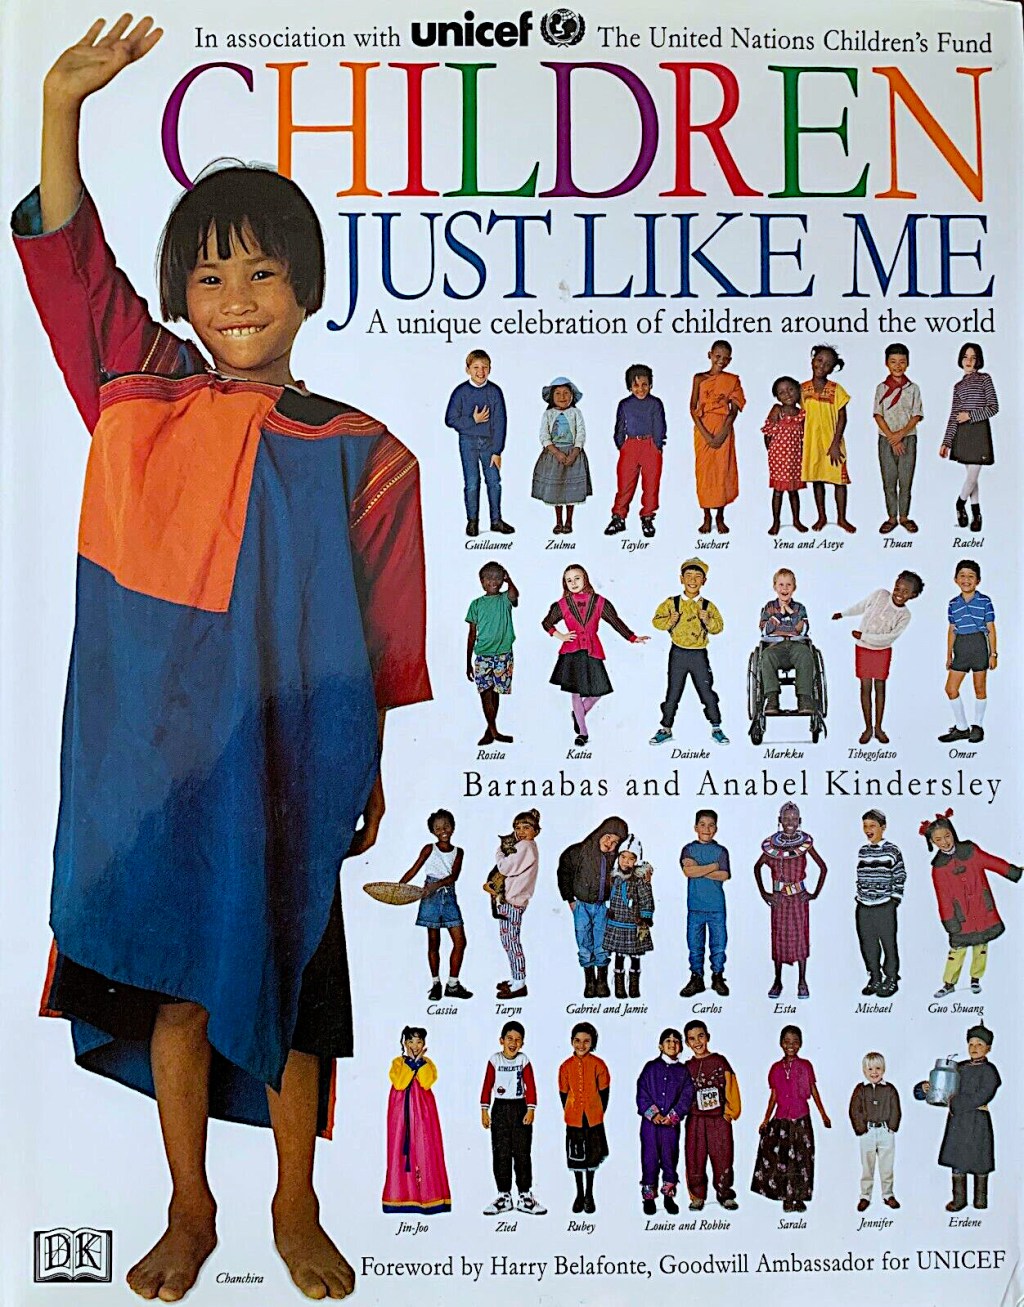 Book "Children Just Like Me" Unicef